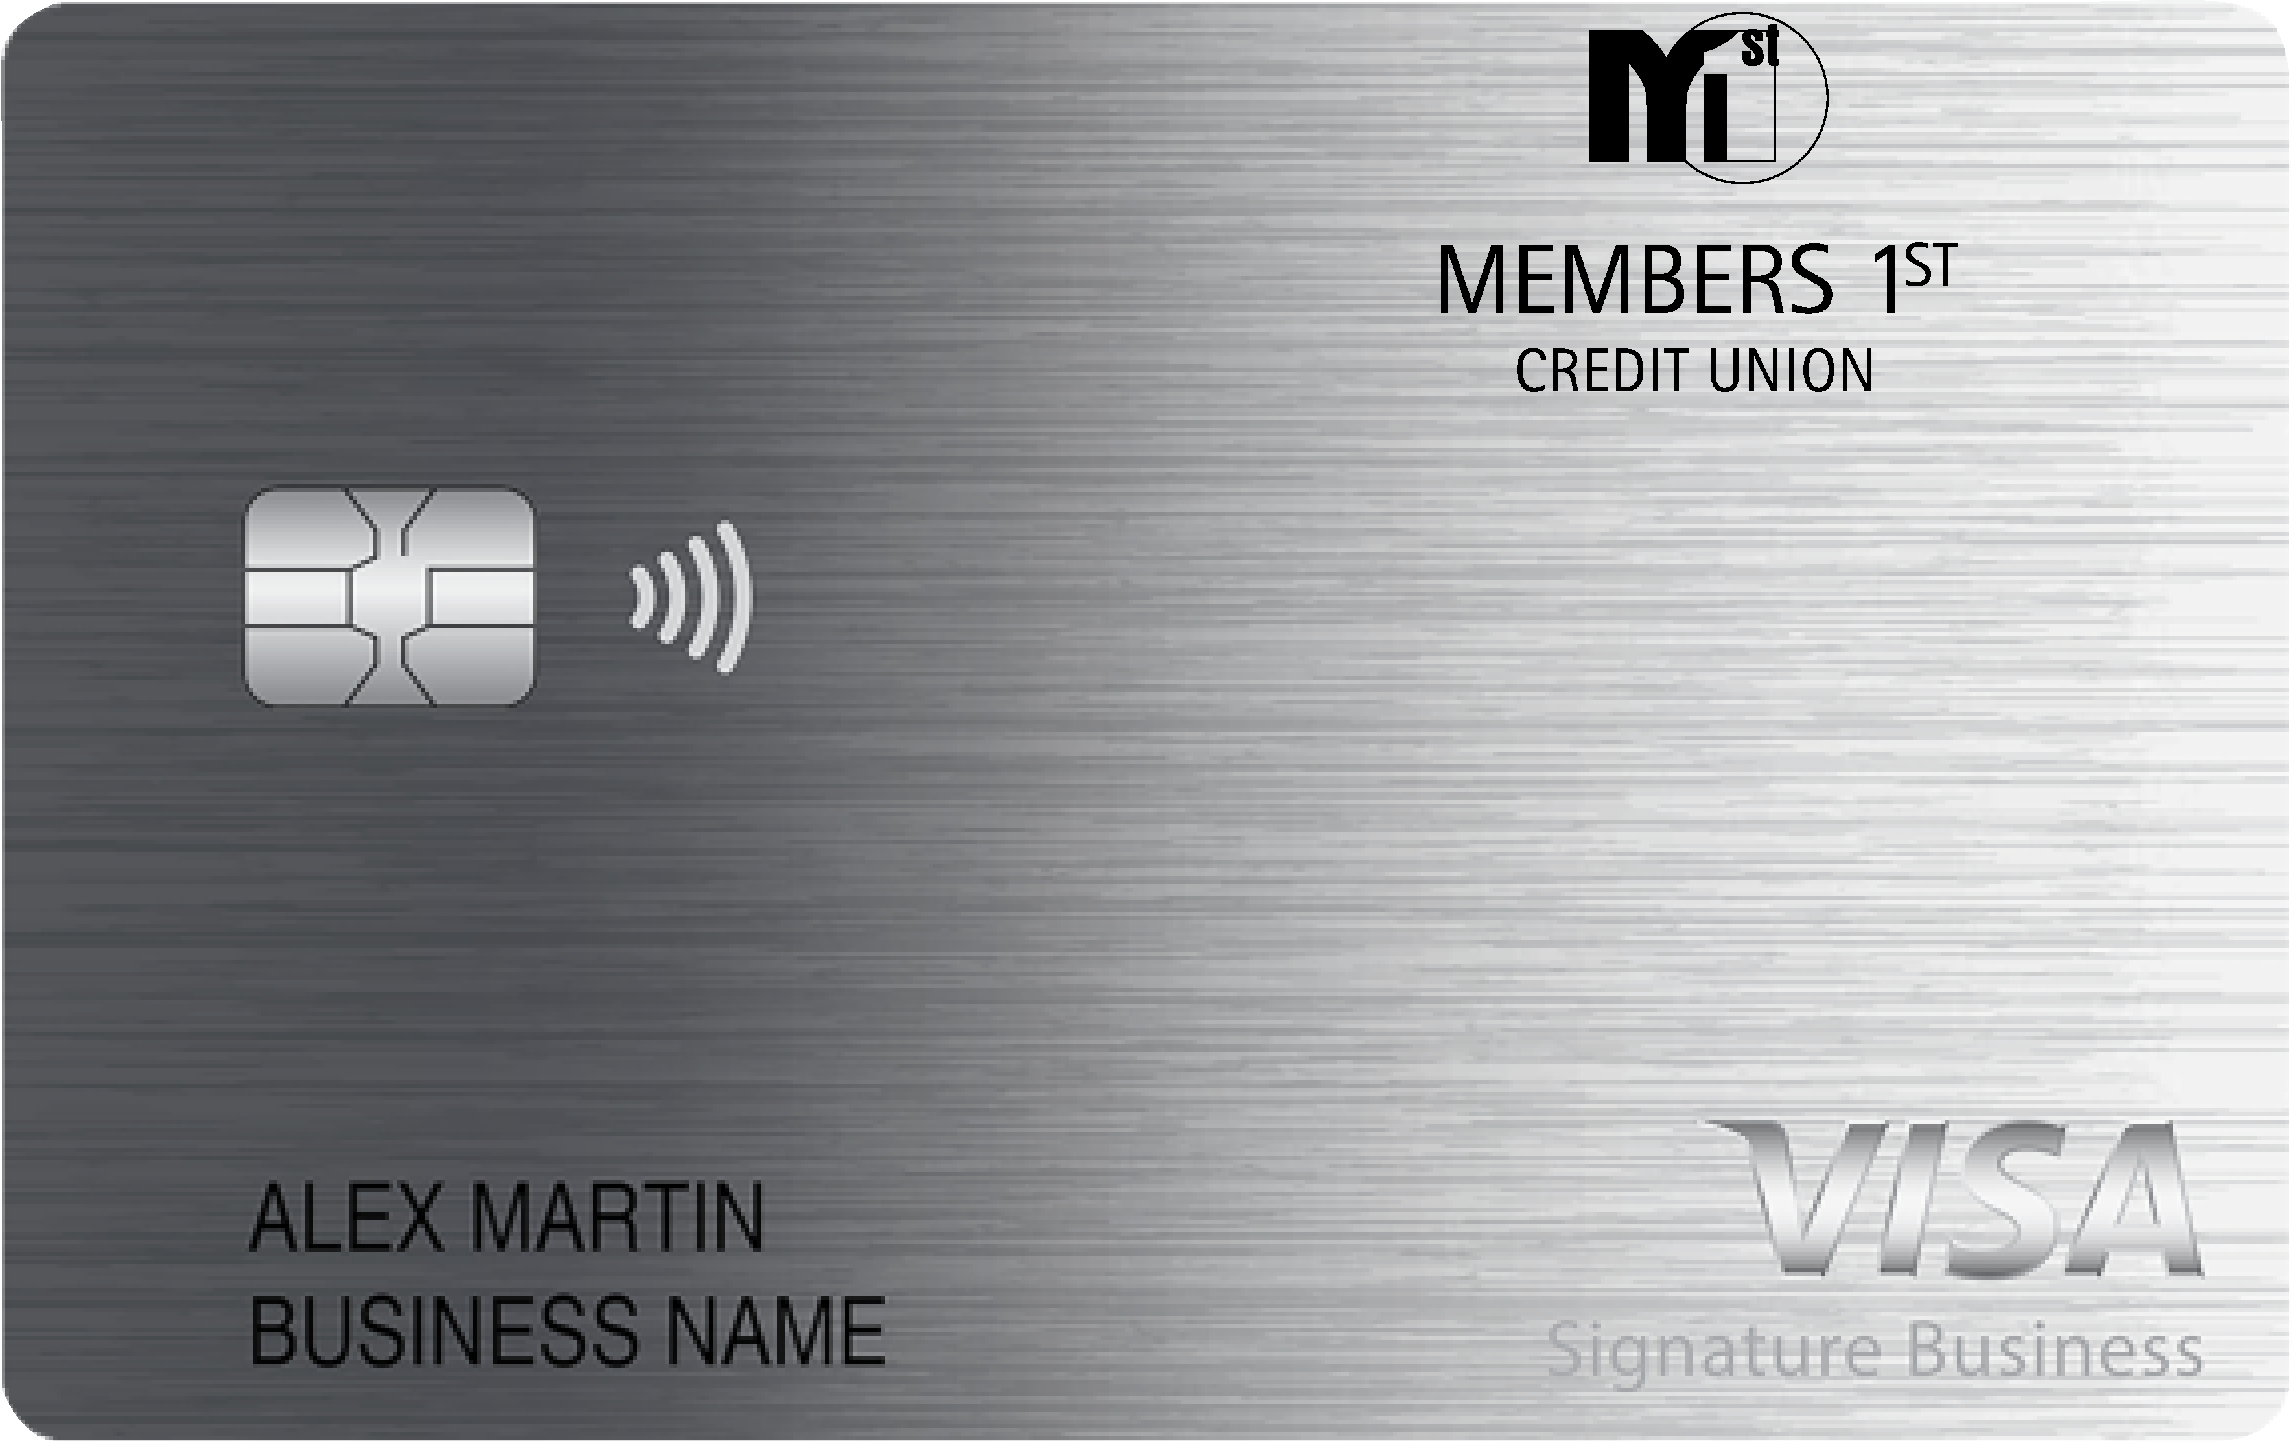 Members 1st Credit Union Smart Business Rewards Card